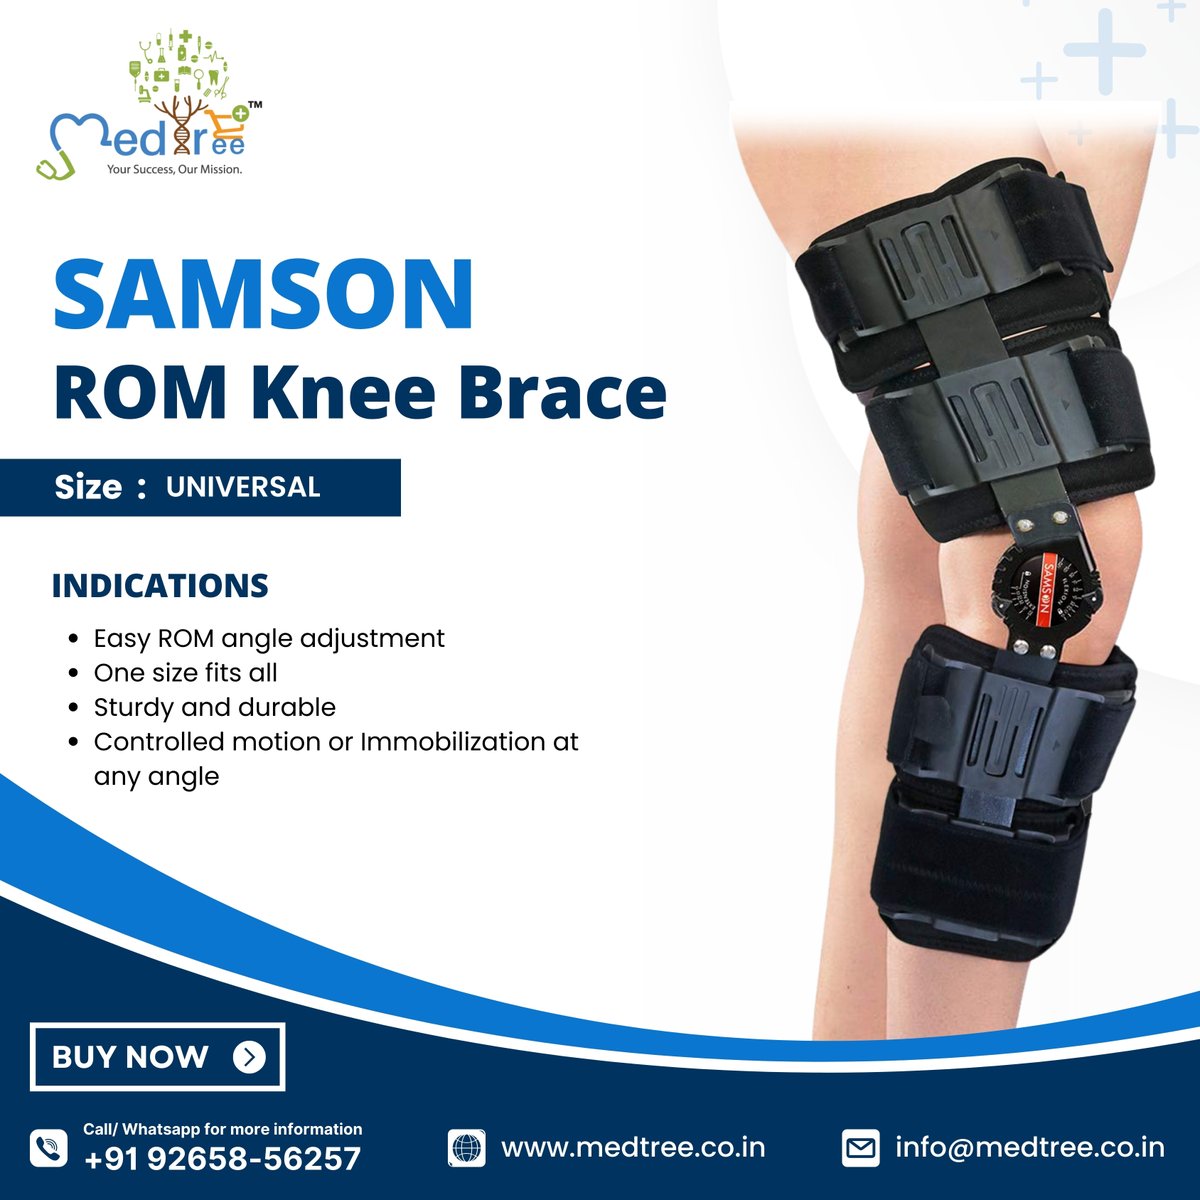 Samson ROM Knee Brace
Buy Now: medtree.co.in/product/rom-kn…

#romkneebrace #kneebrace #kneepain #knee #samsonorthotics #adjustablekneebrace #kneejoints #orthopaedics #kneecare #braces #OrthopedicCare #MedTree #medtreeindia